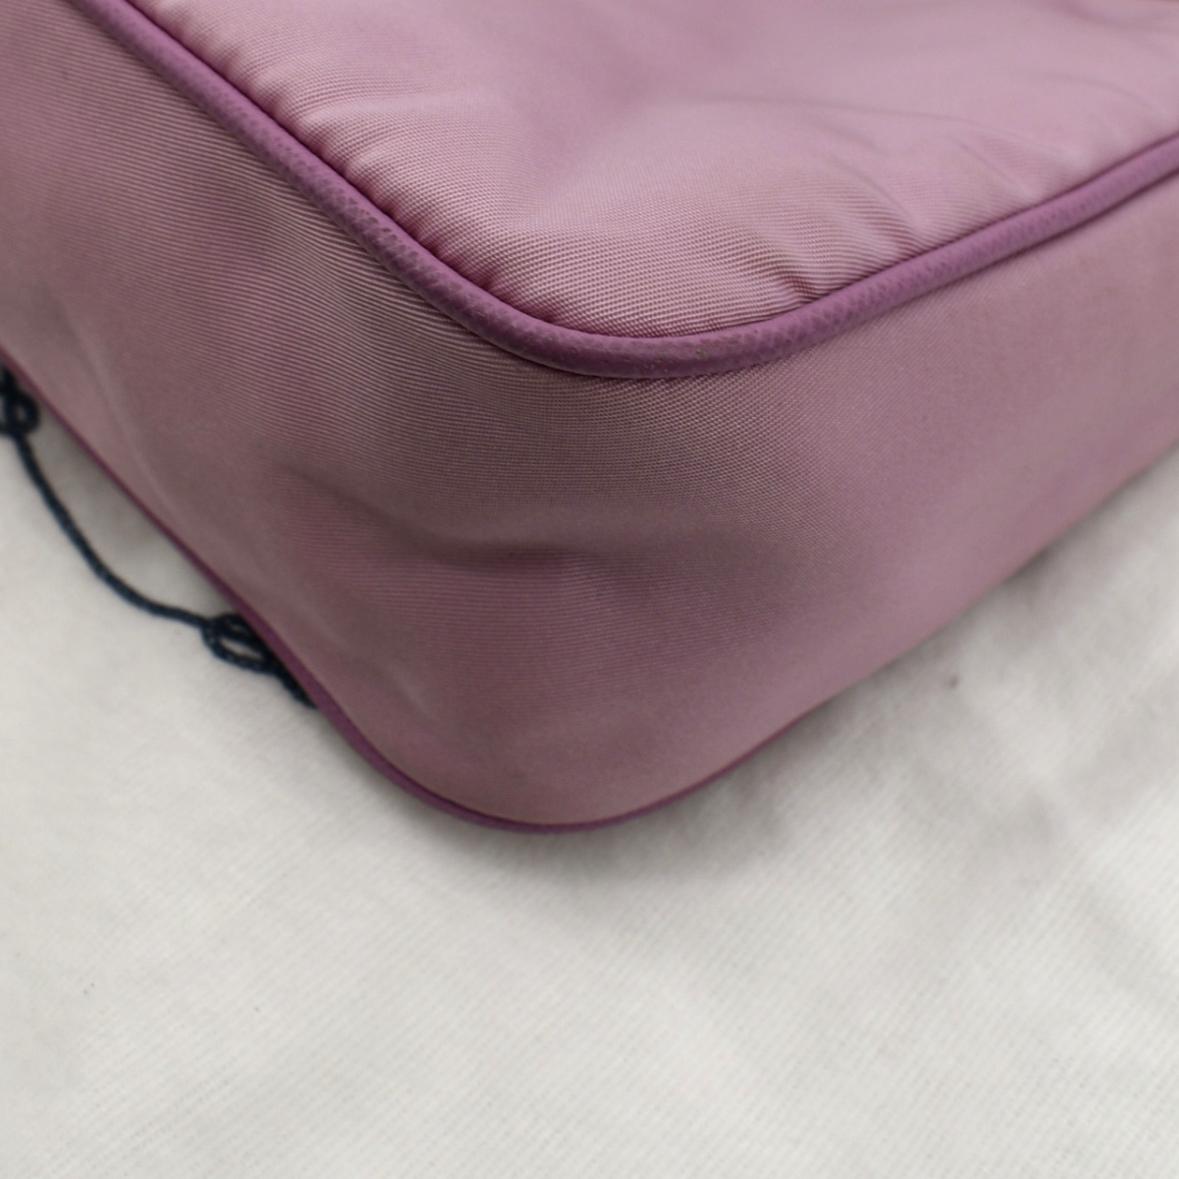 Prada Re-Edition 2005 Shoulder Bag Tessuto Small Pink 88653299